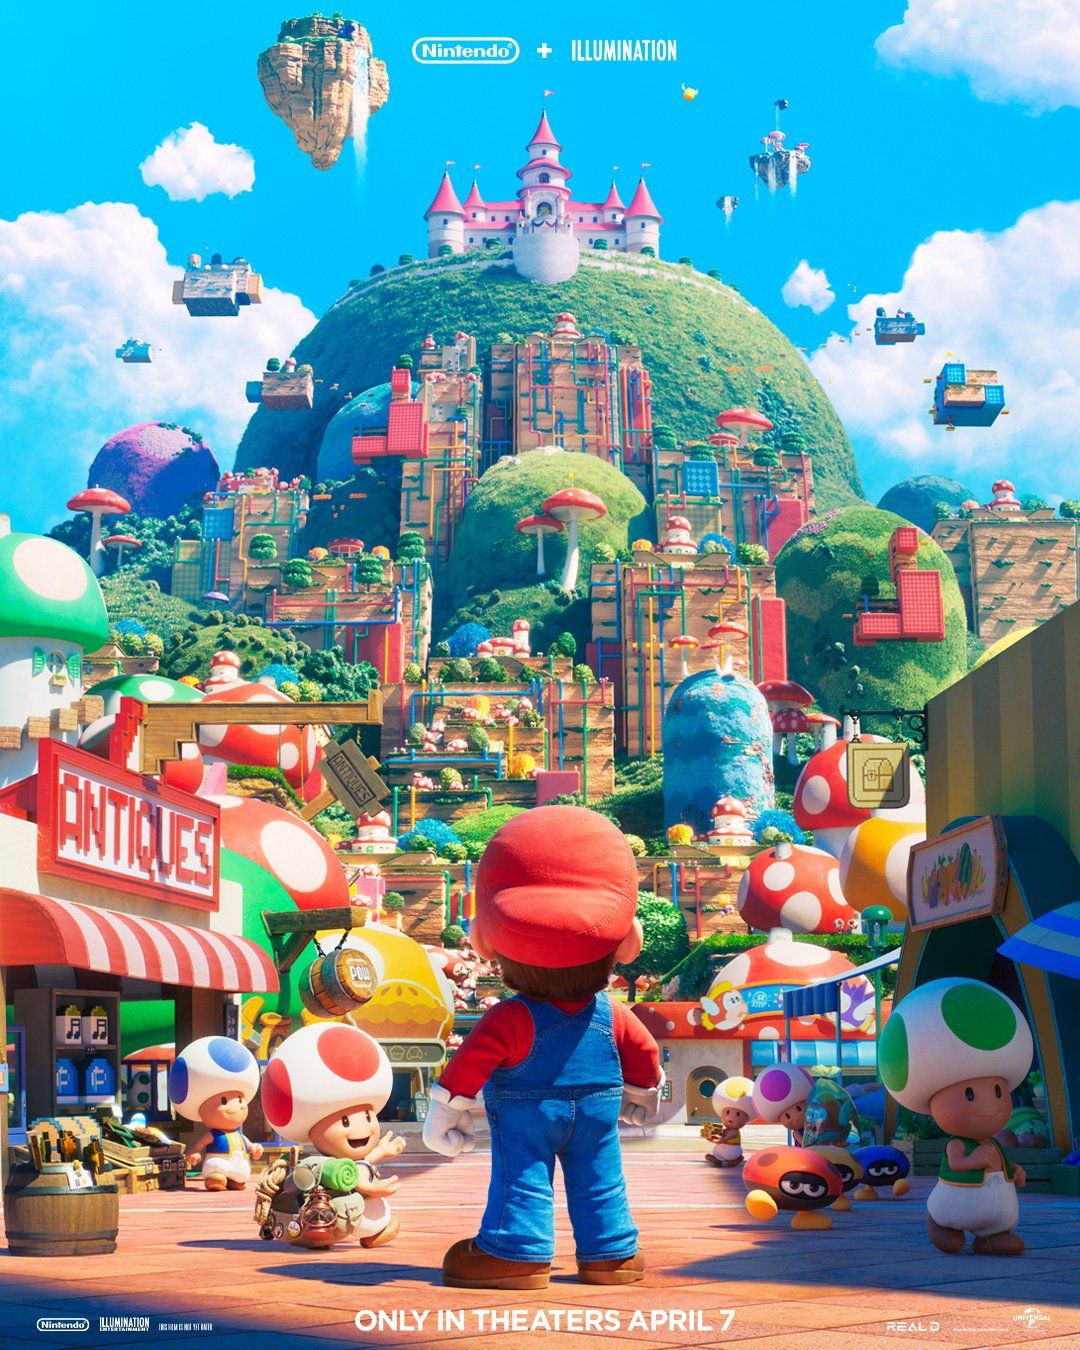 A new Super Mario Bros. movie poster featuring Mario staring at a mushroom kingdom village. - Super Mario